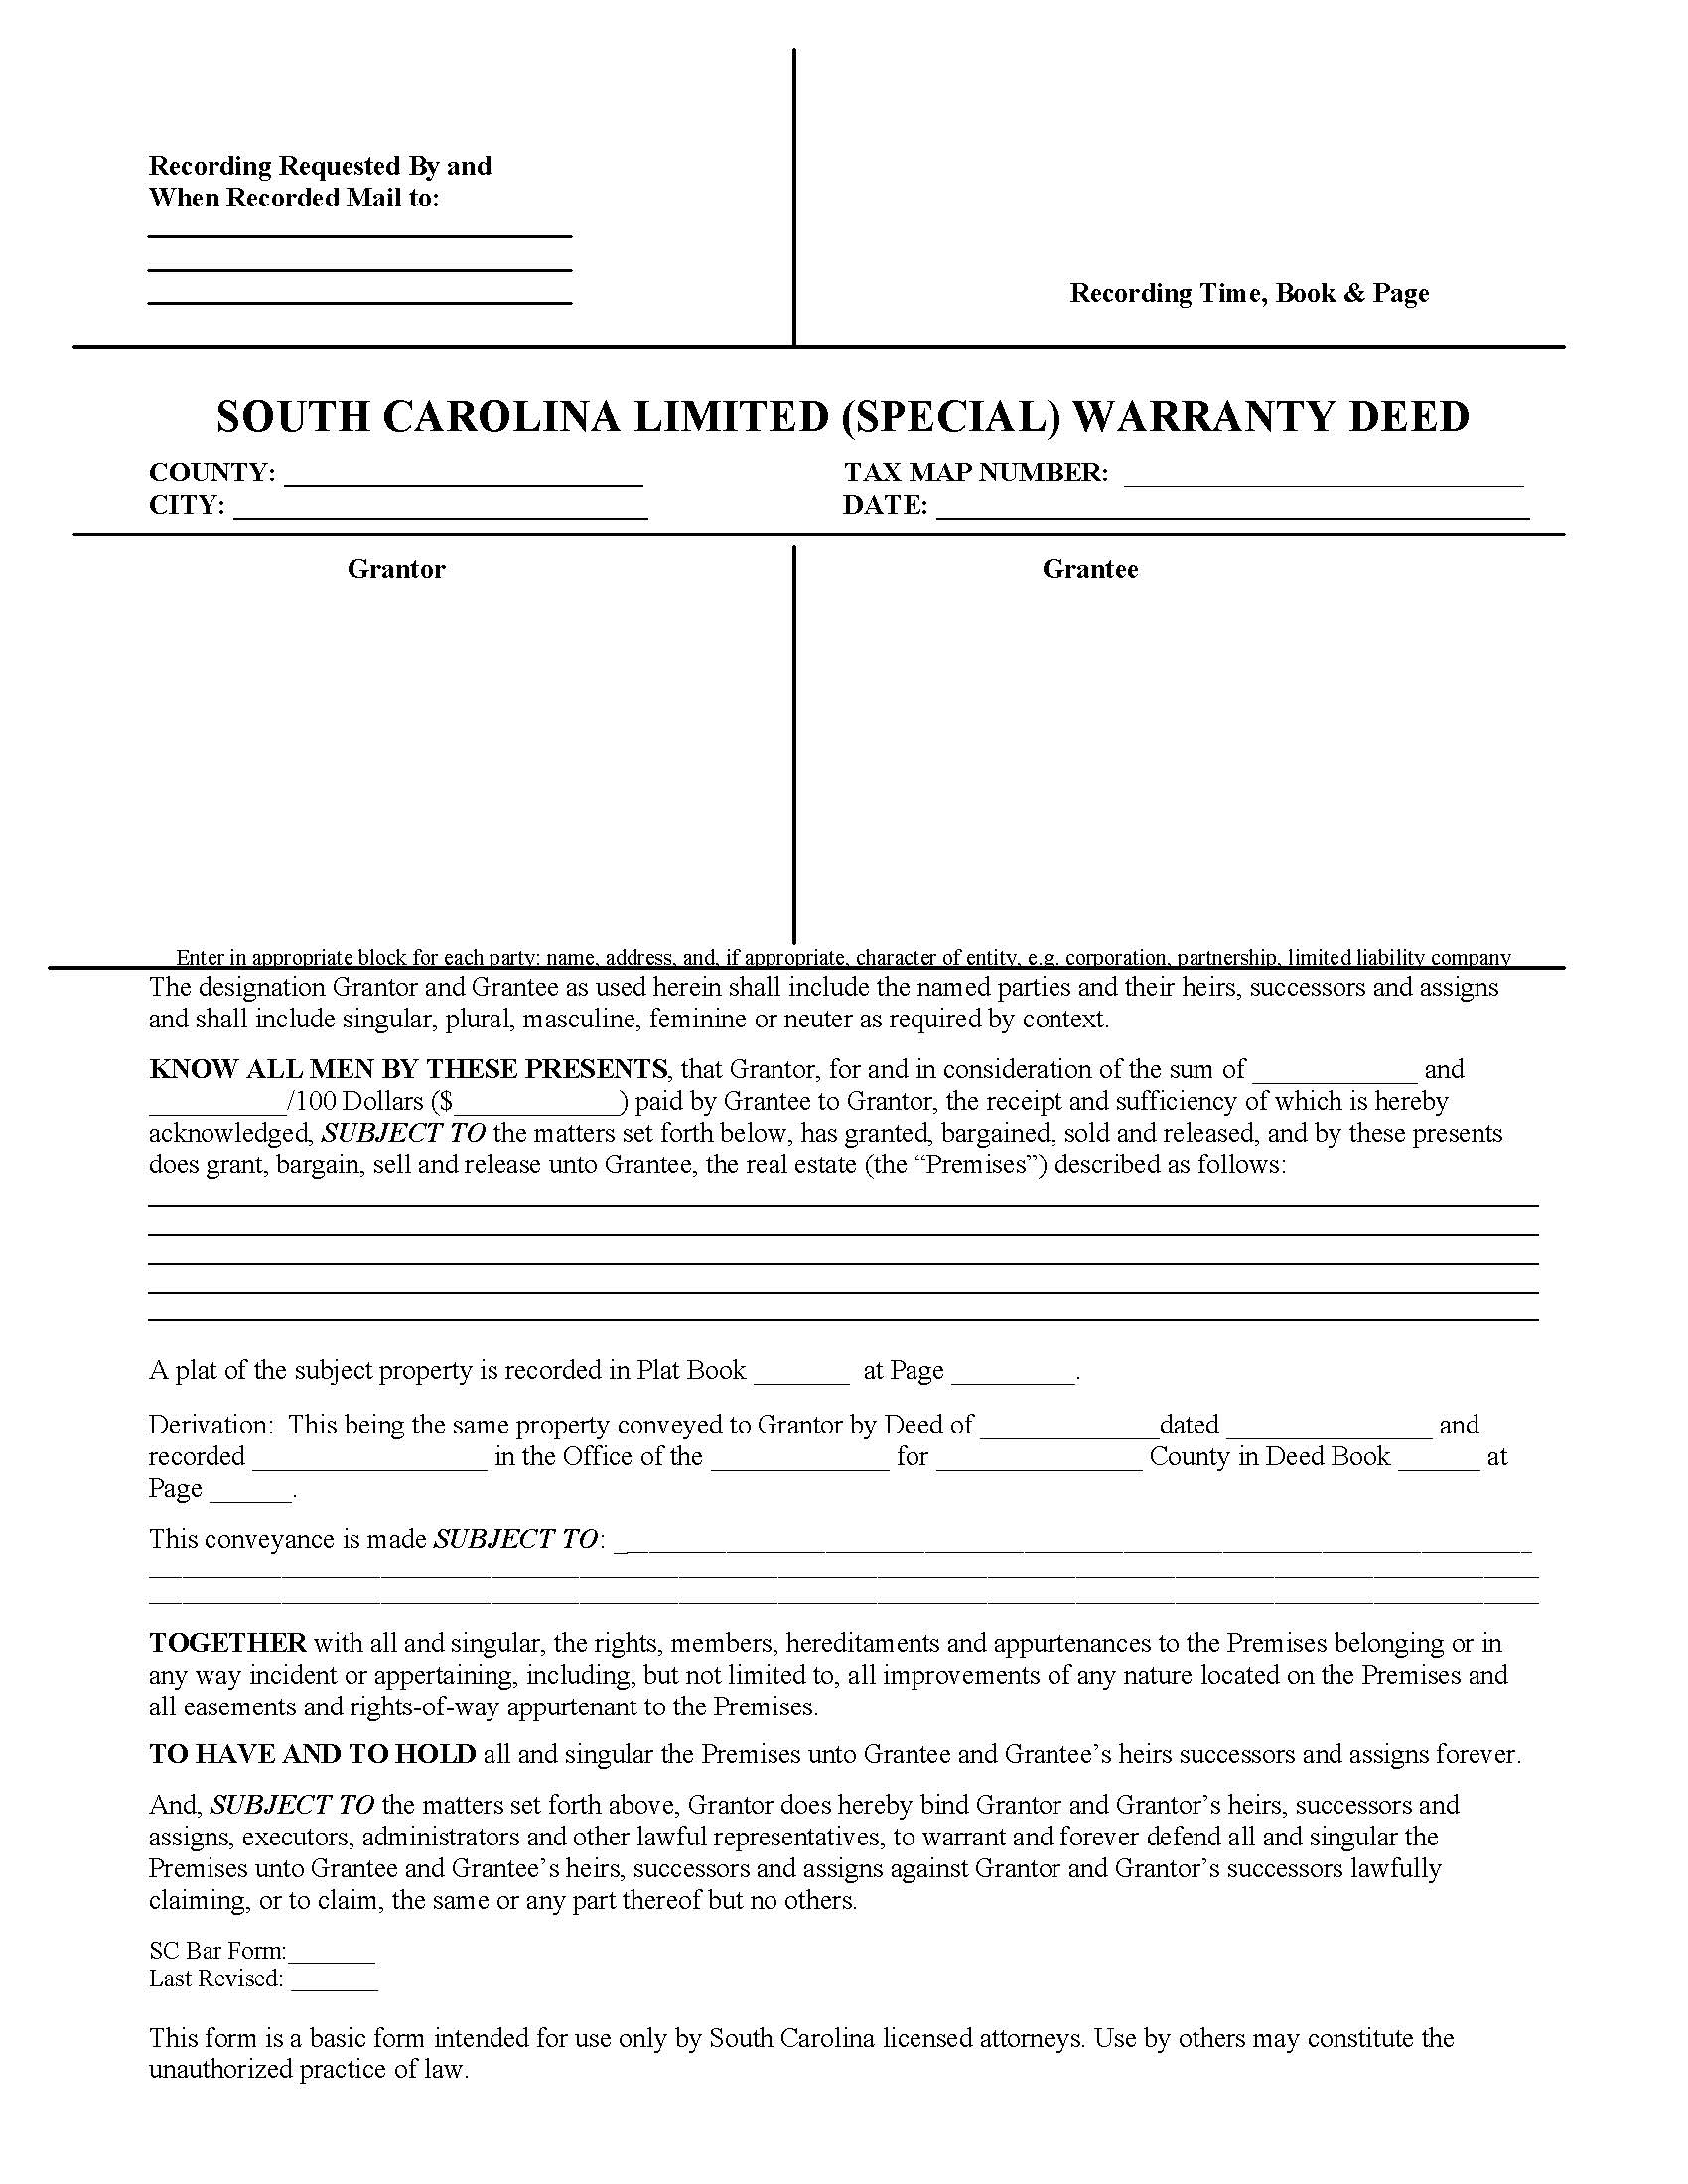 South Carolina Special Warranty Deed Form_Page_1